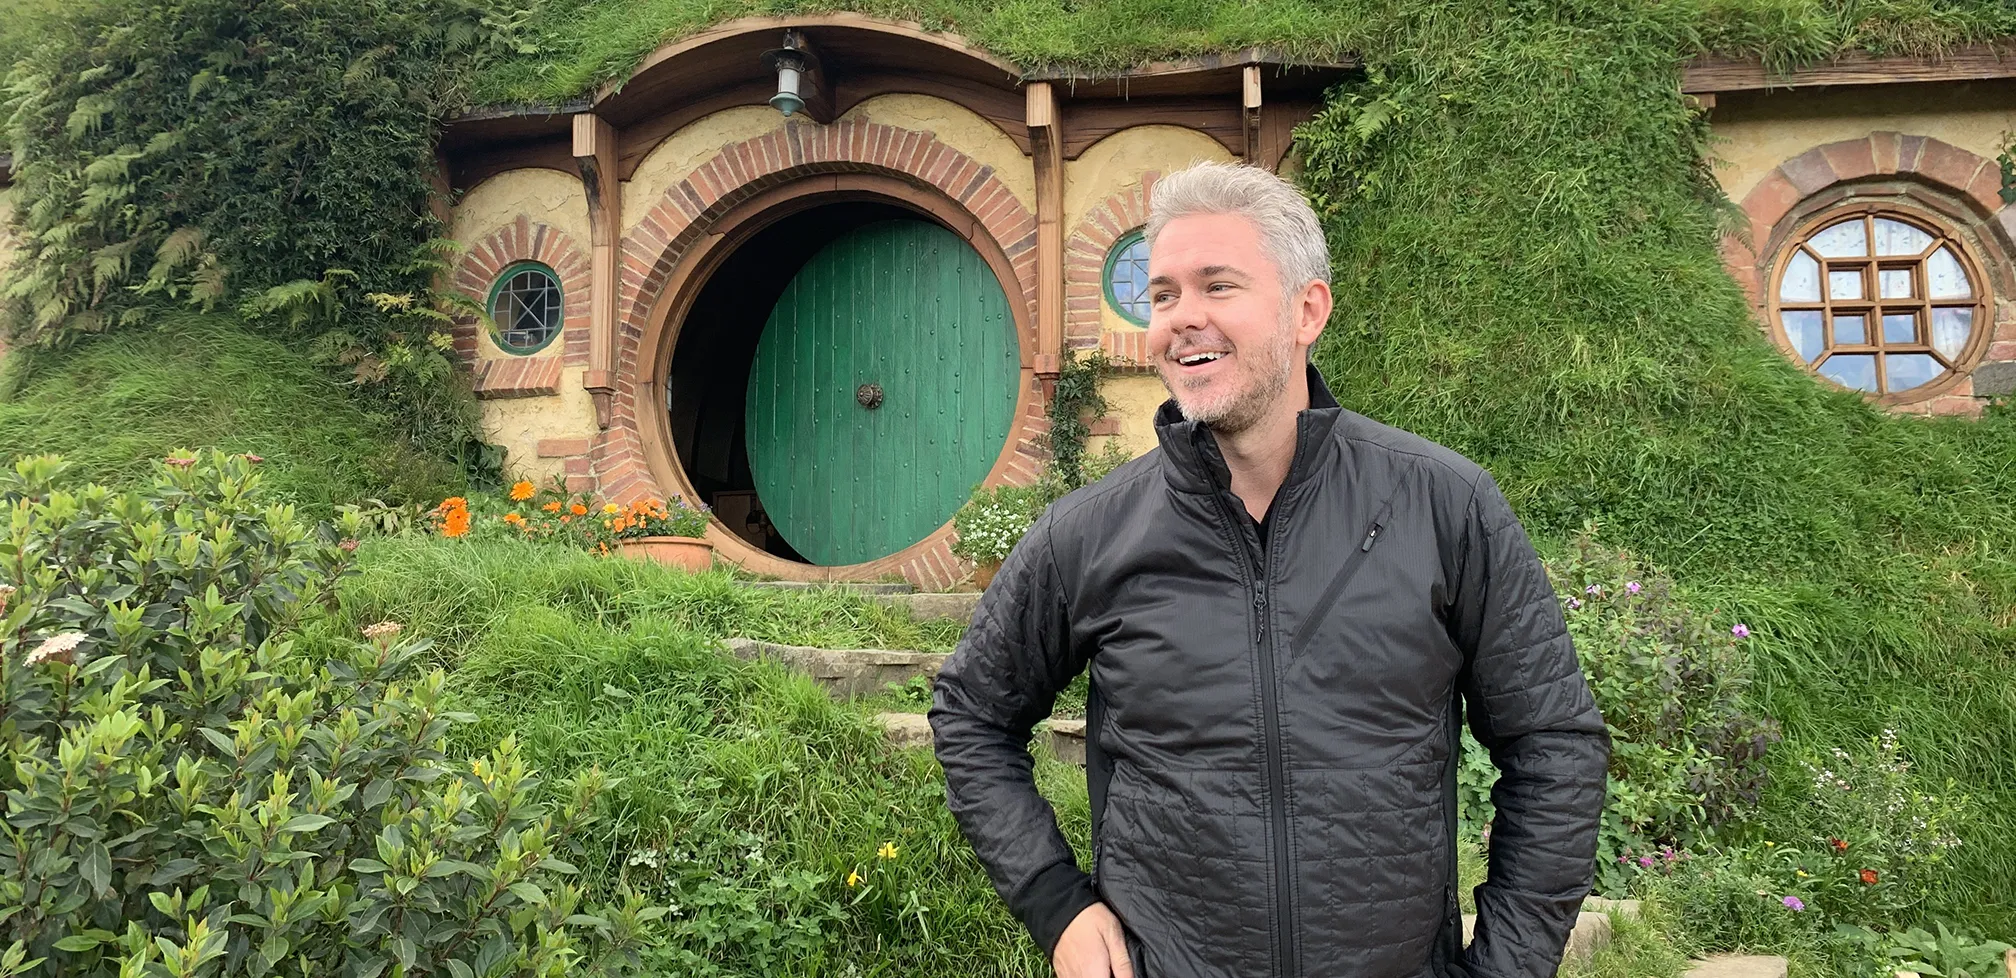 Bret McGowen laughing in front of some Hobbit doors